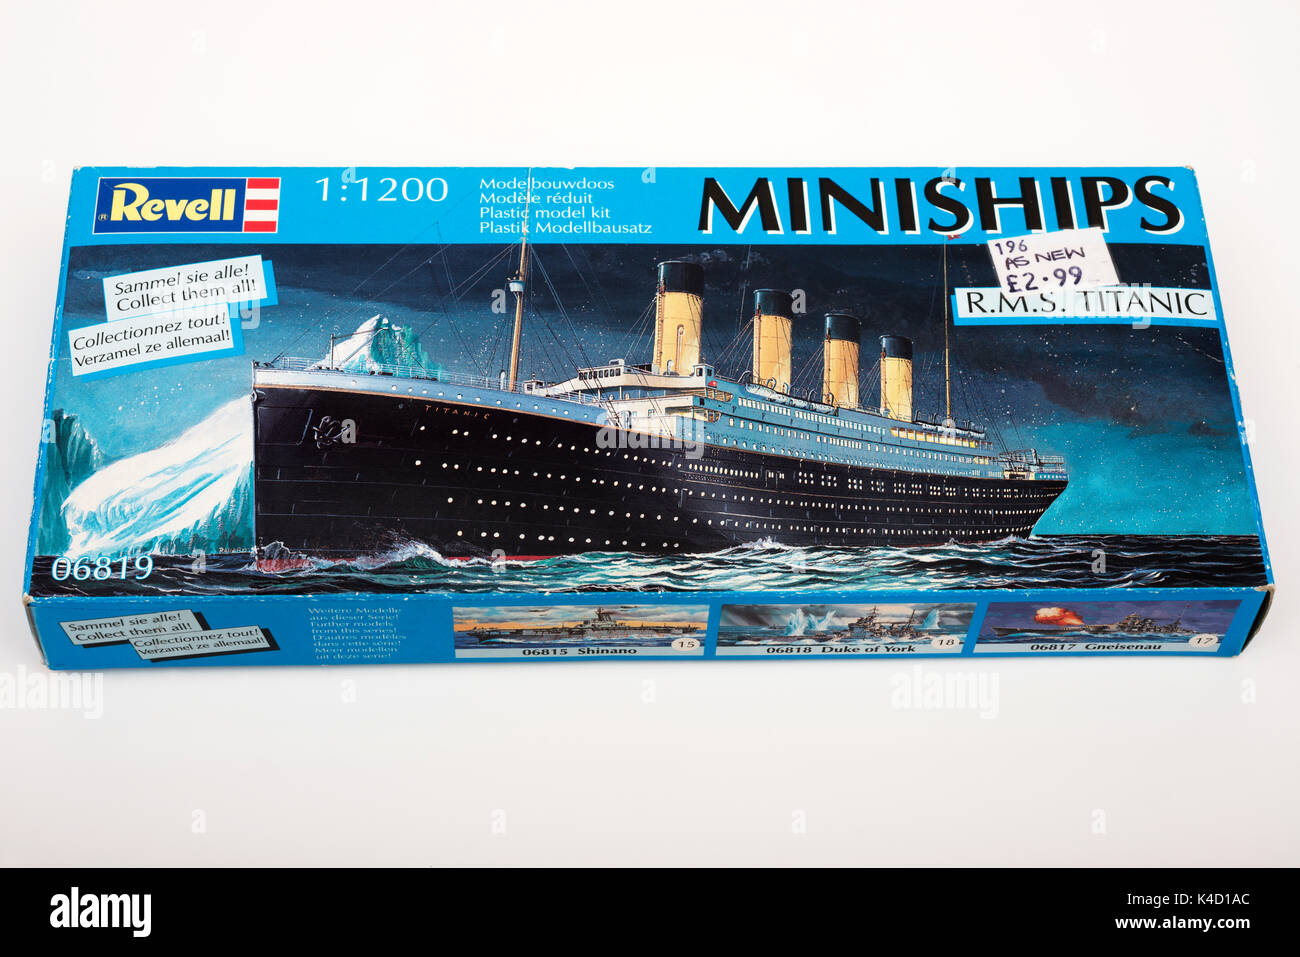 Revell 1:1200 R.M.S. Titanic model kit Stock Photo - Alamy